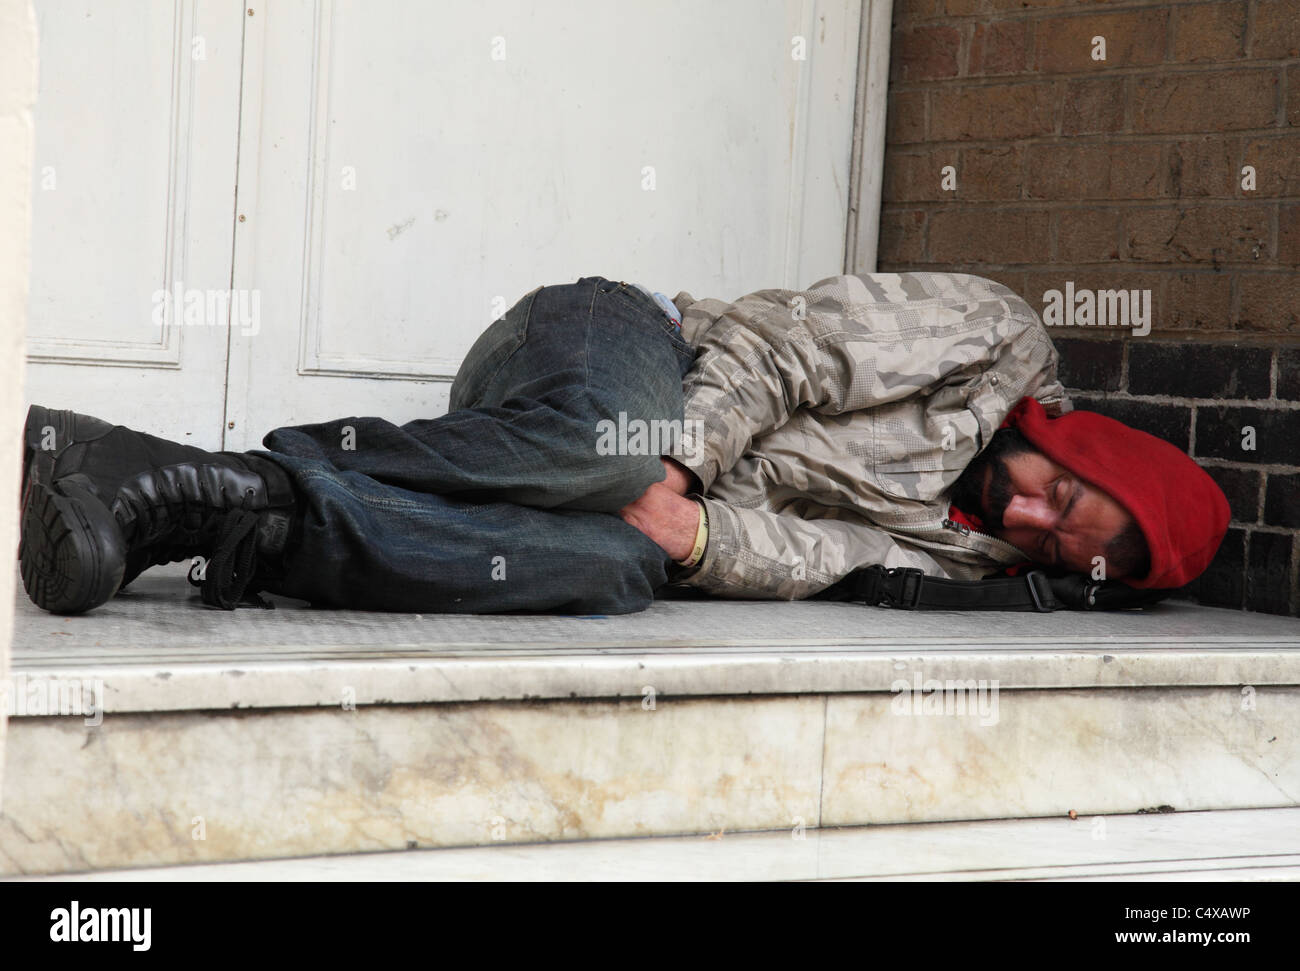 A homeless man  sleeping rough in a doorway in a U.K. city. Stock Photo